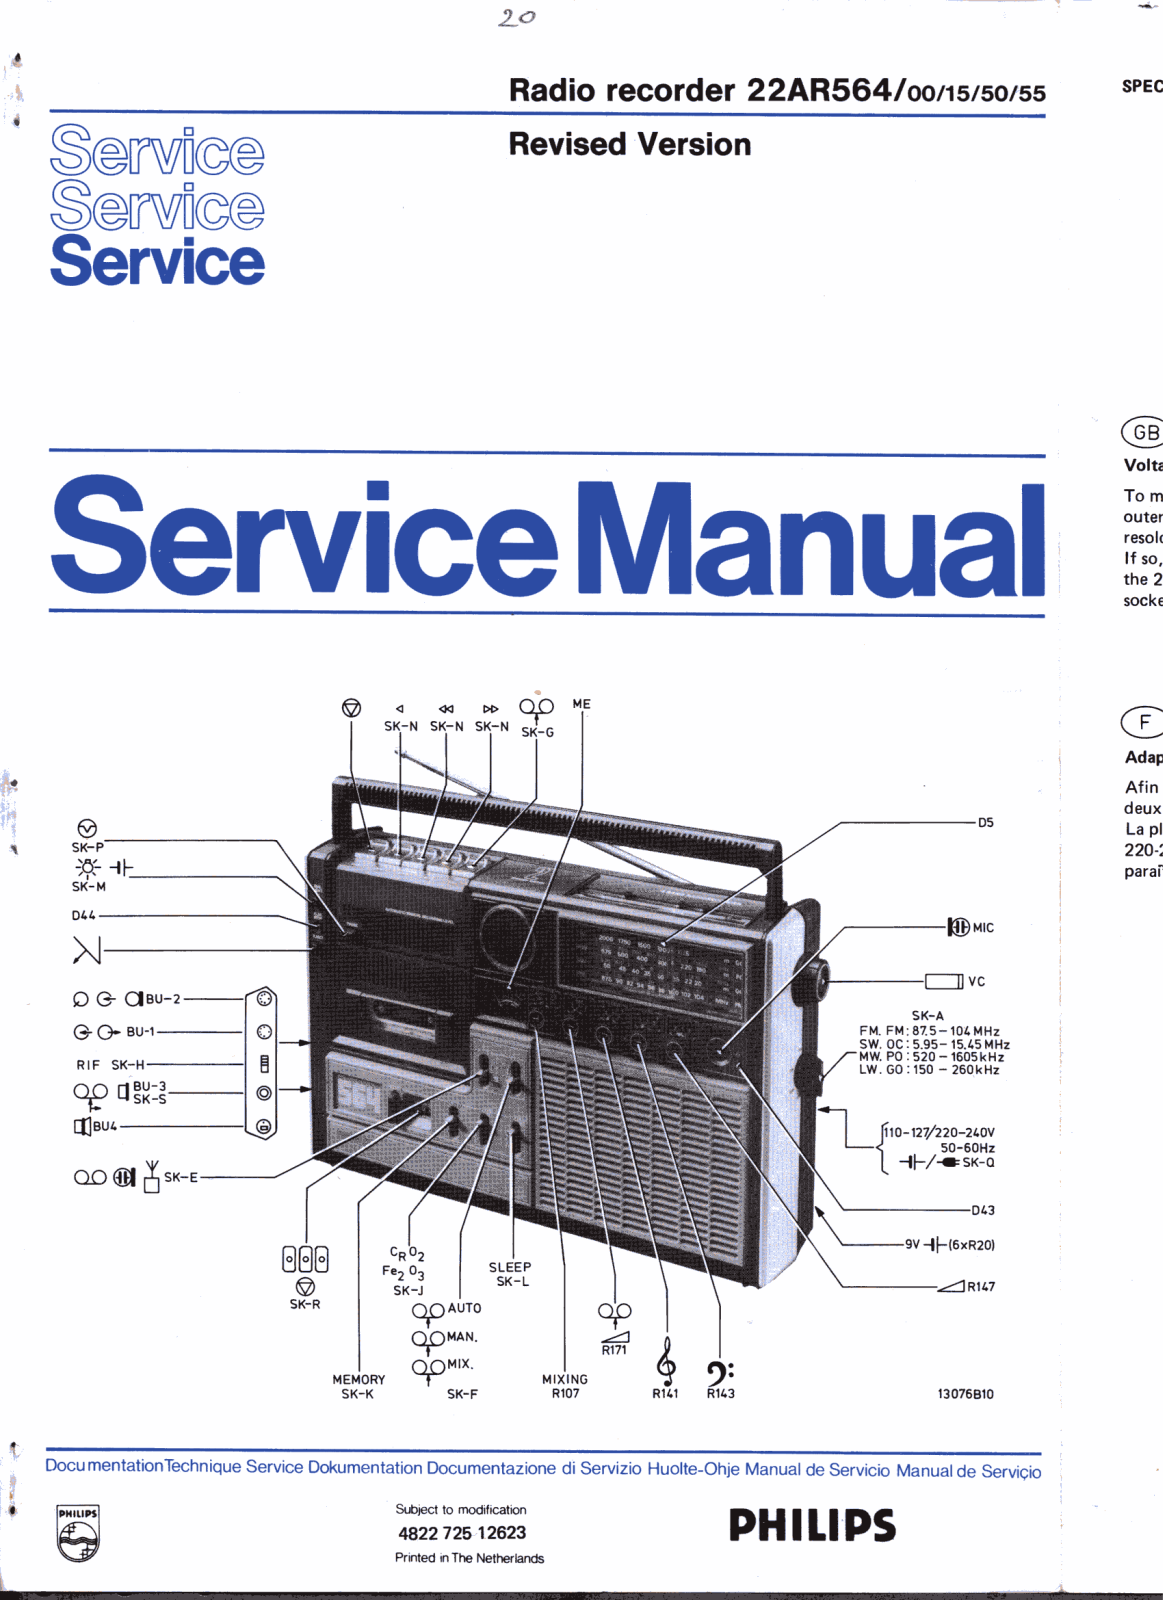 Philips 22-AR-564 Service Manual